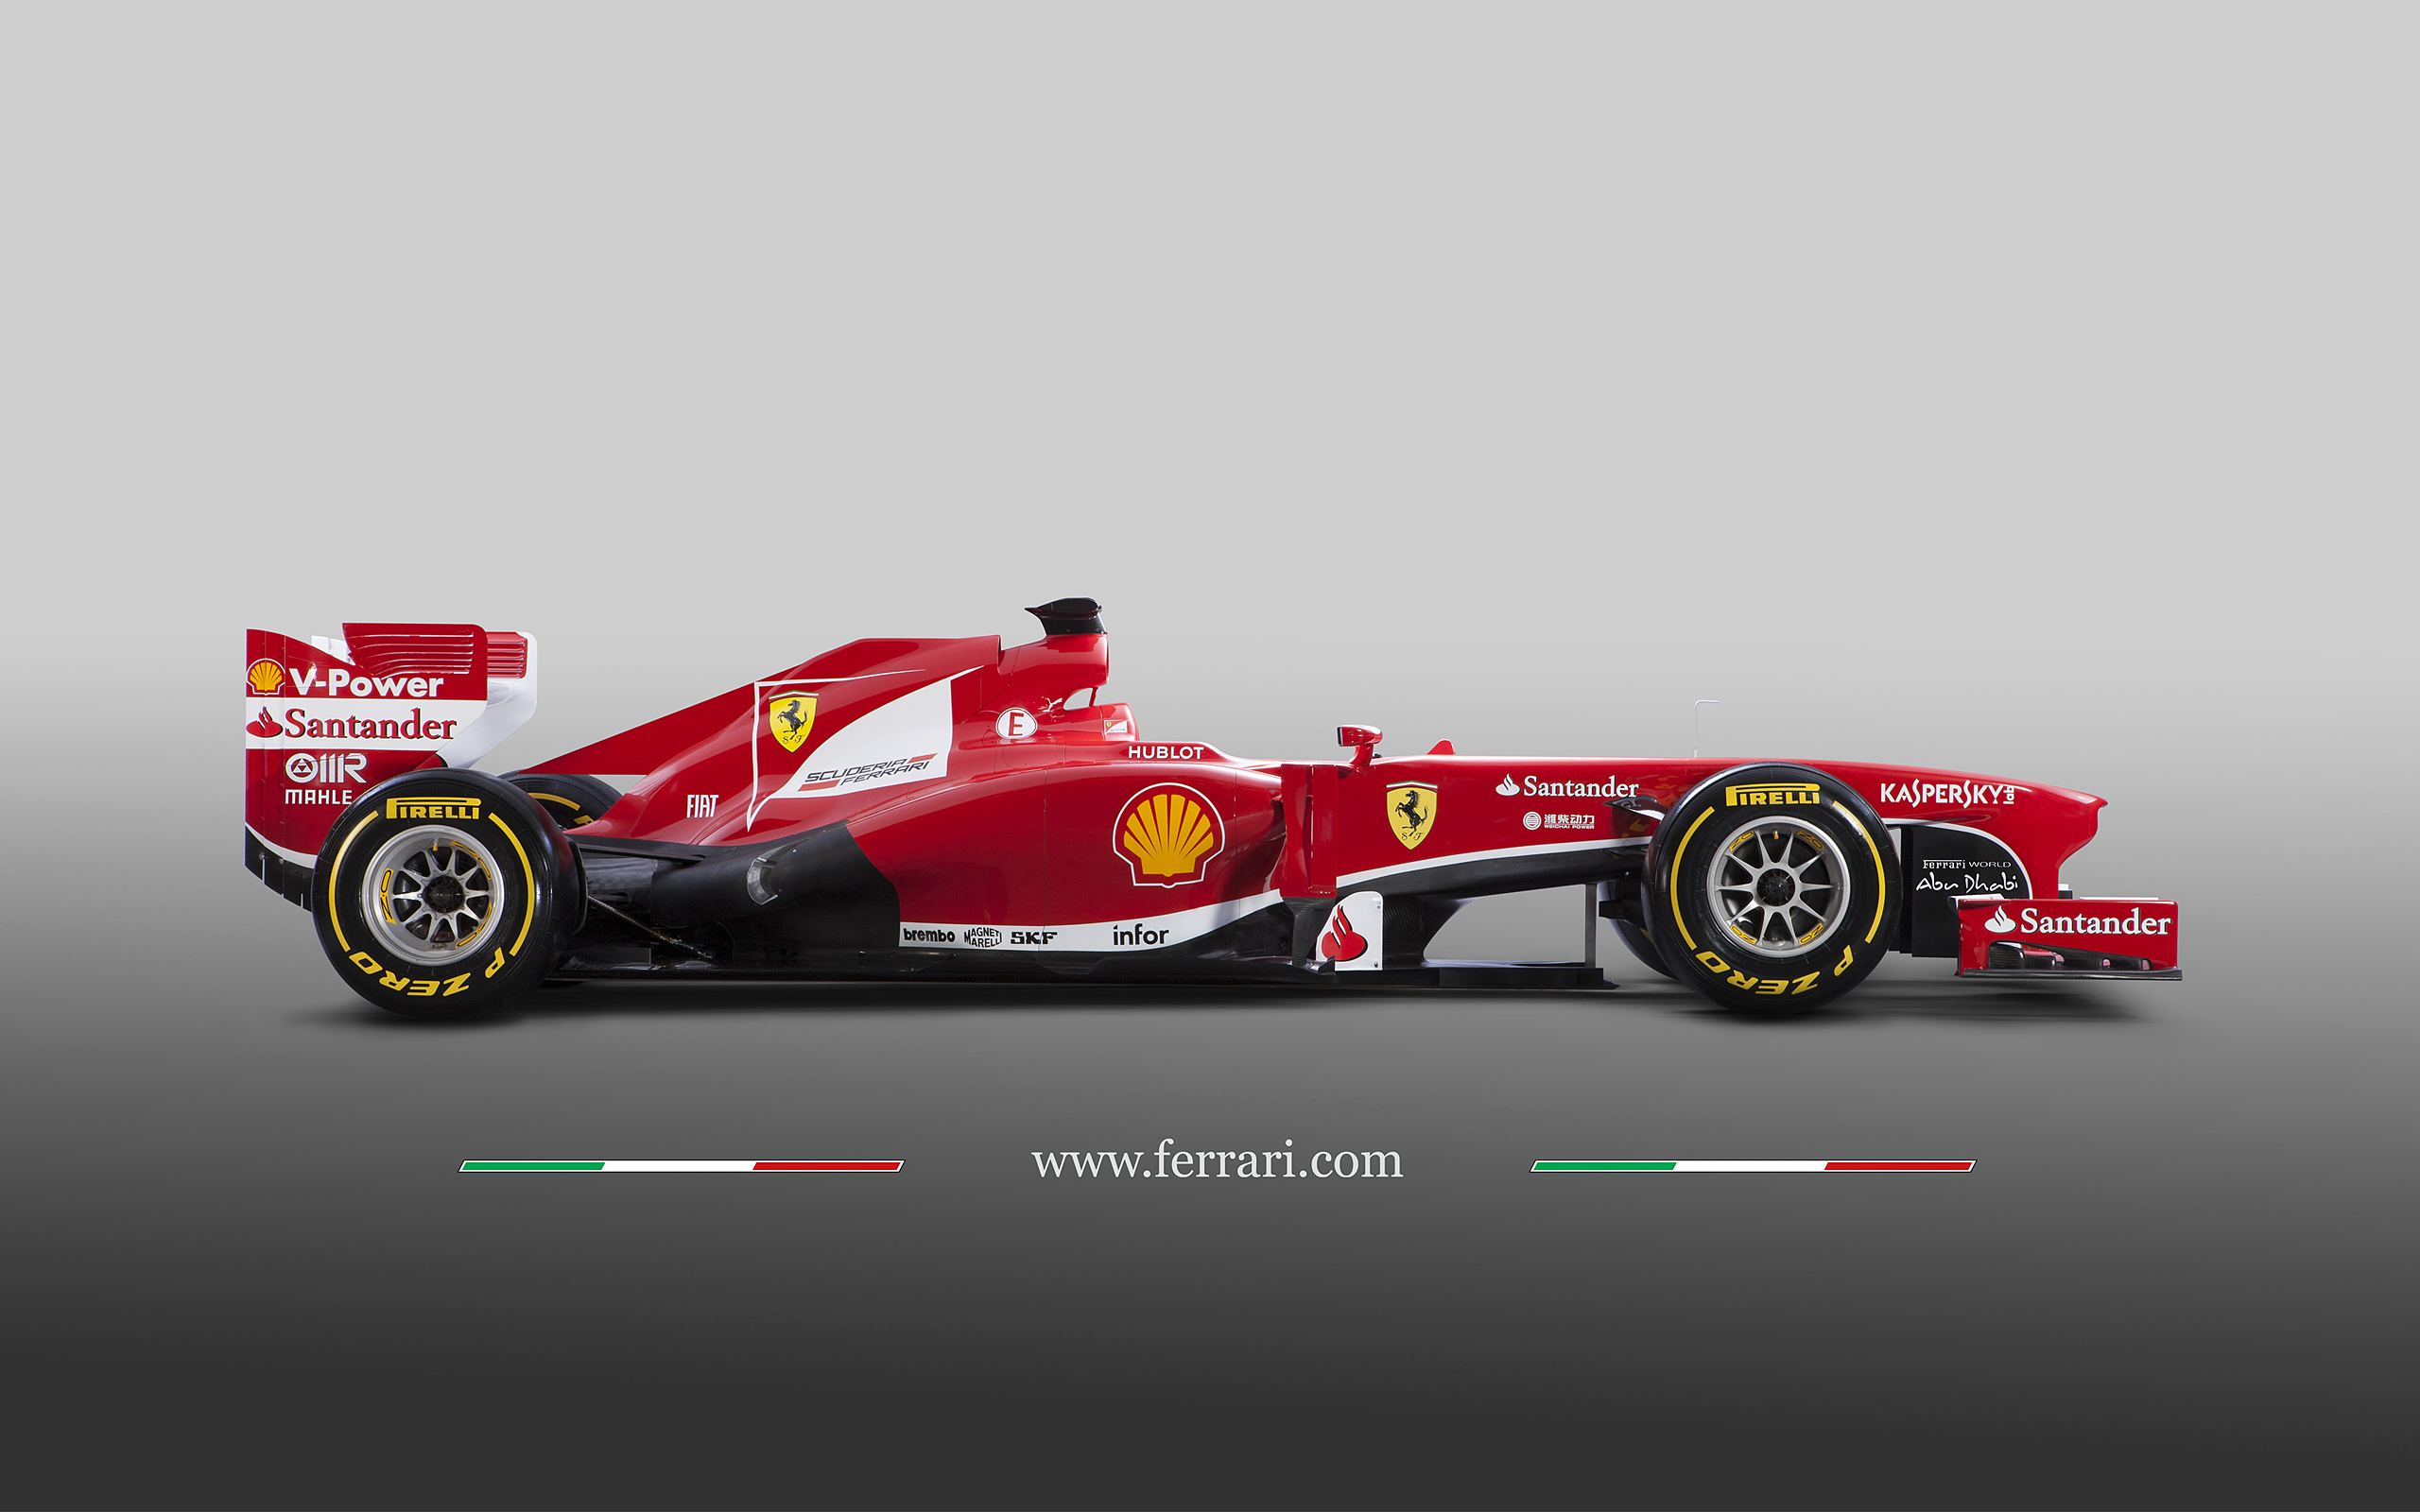  2013 Ferrari F138 Wallpaper.